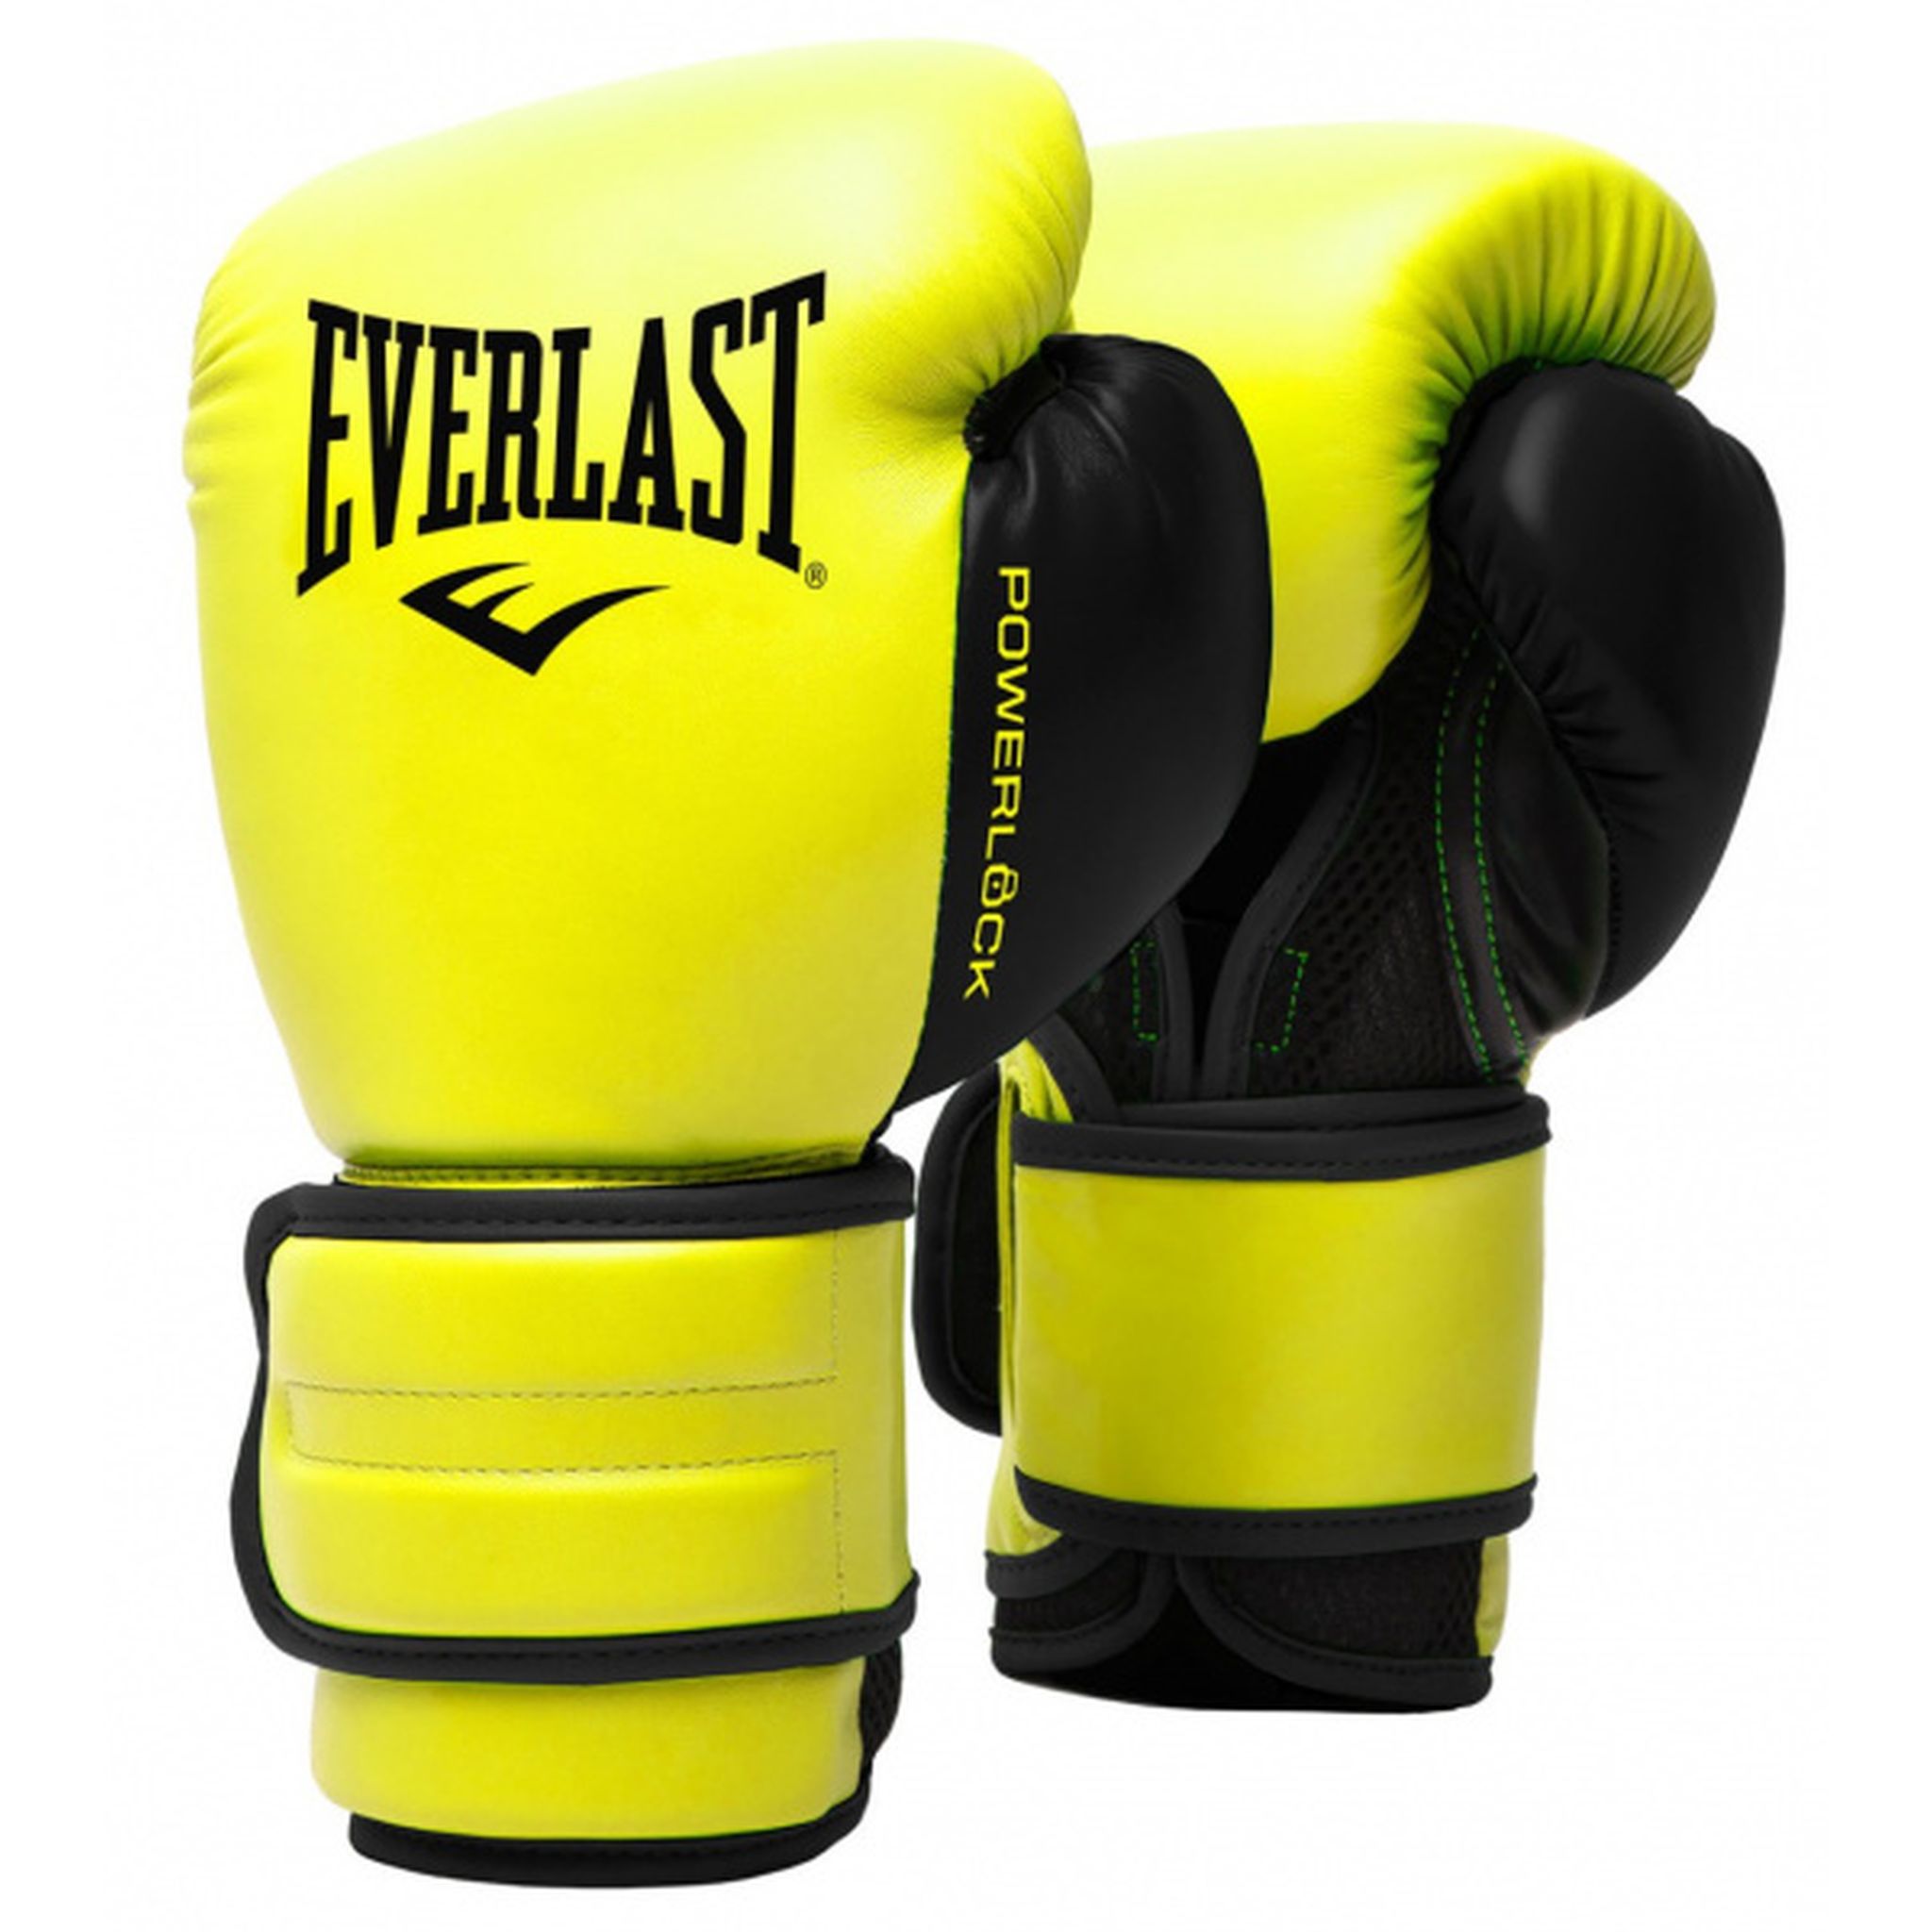 Everlast Powerlock 2 12oz Boxing Training Glove